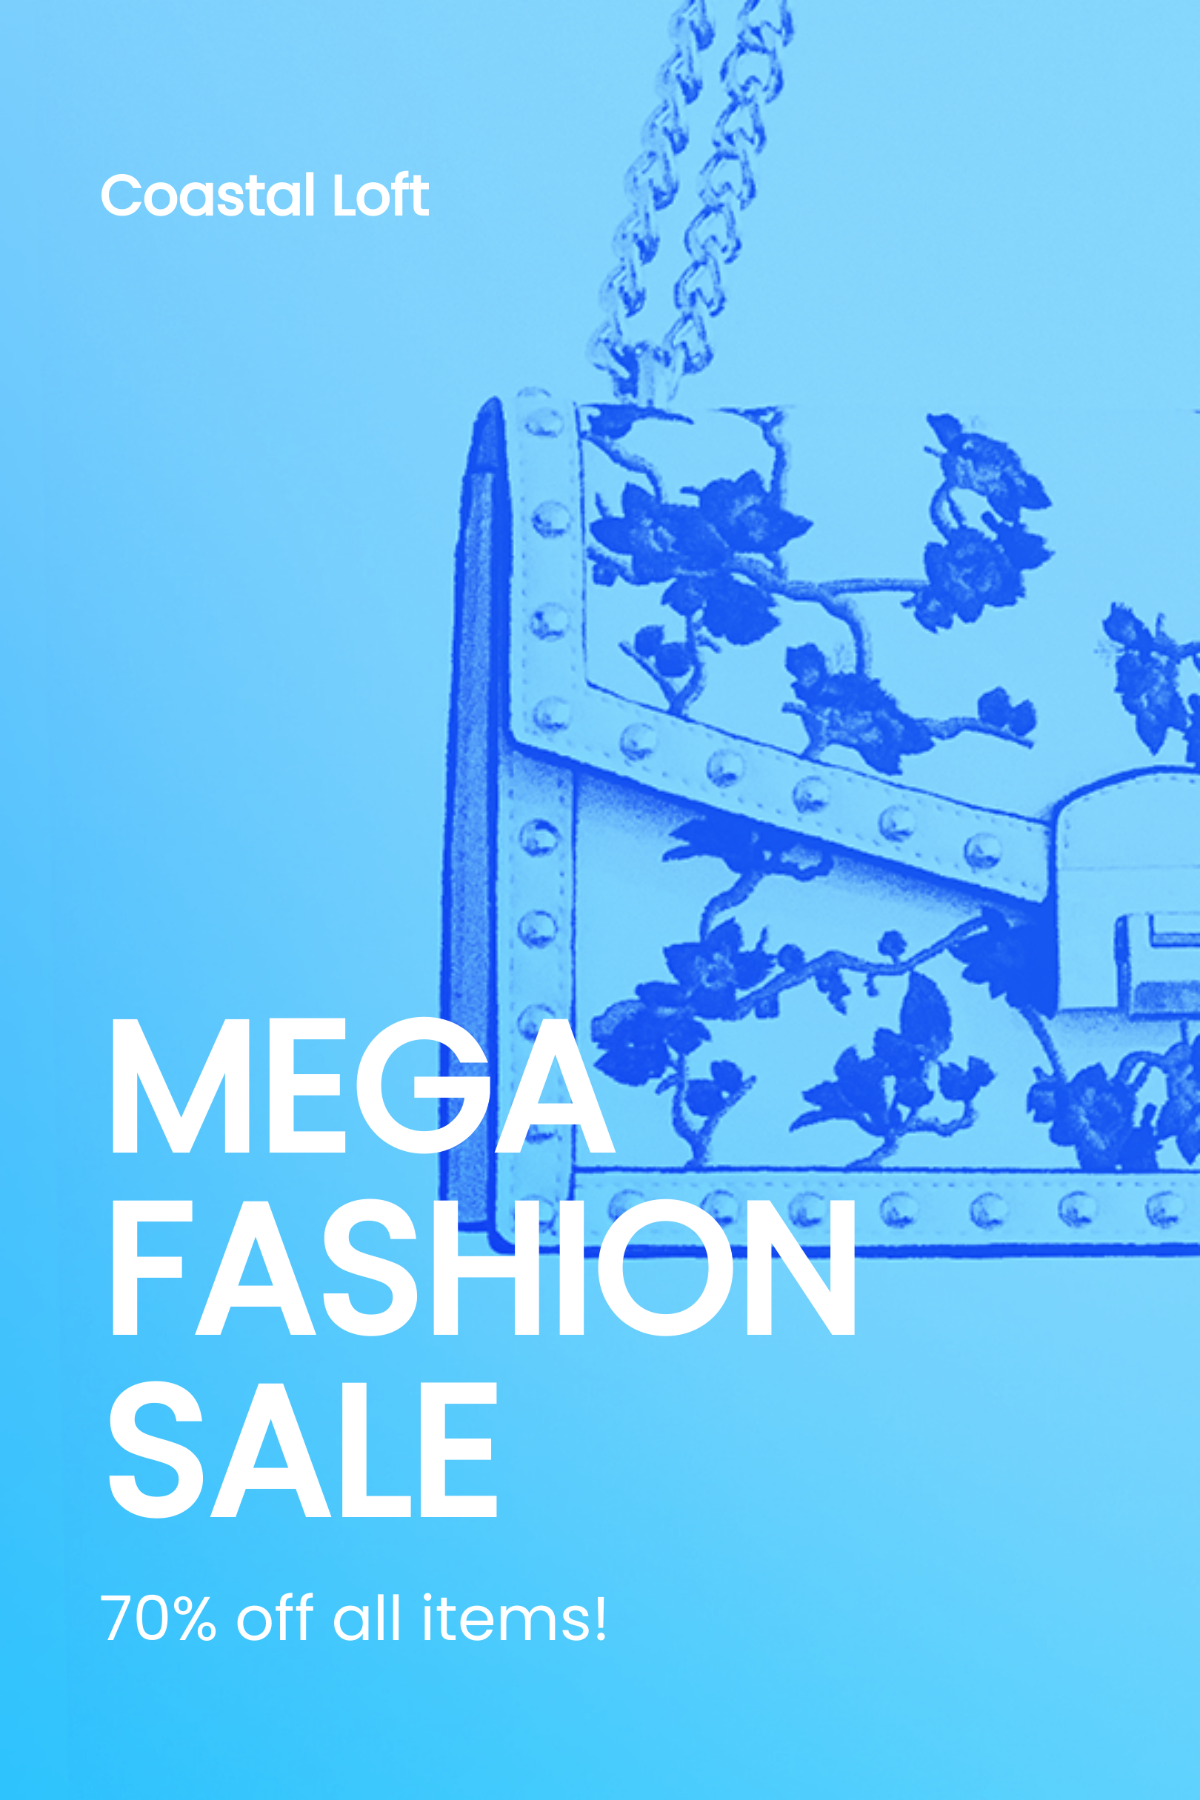 Fashion Sale Promotion Tumblr Post